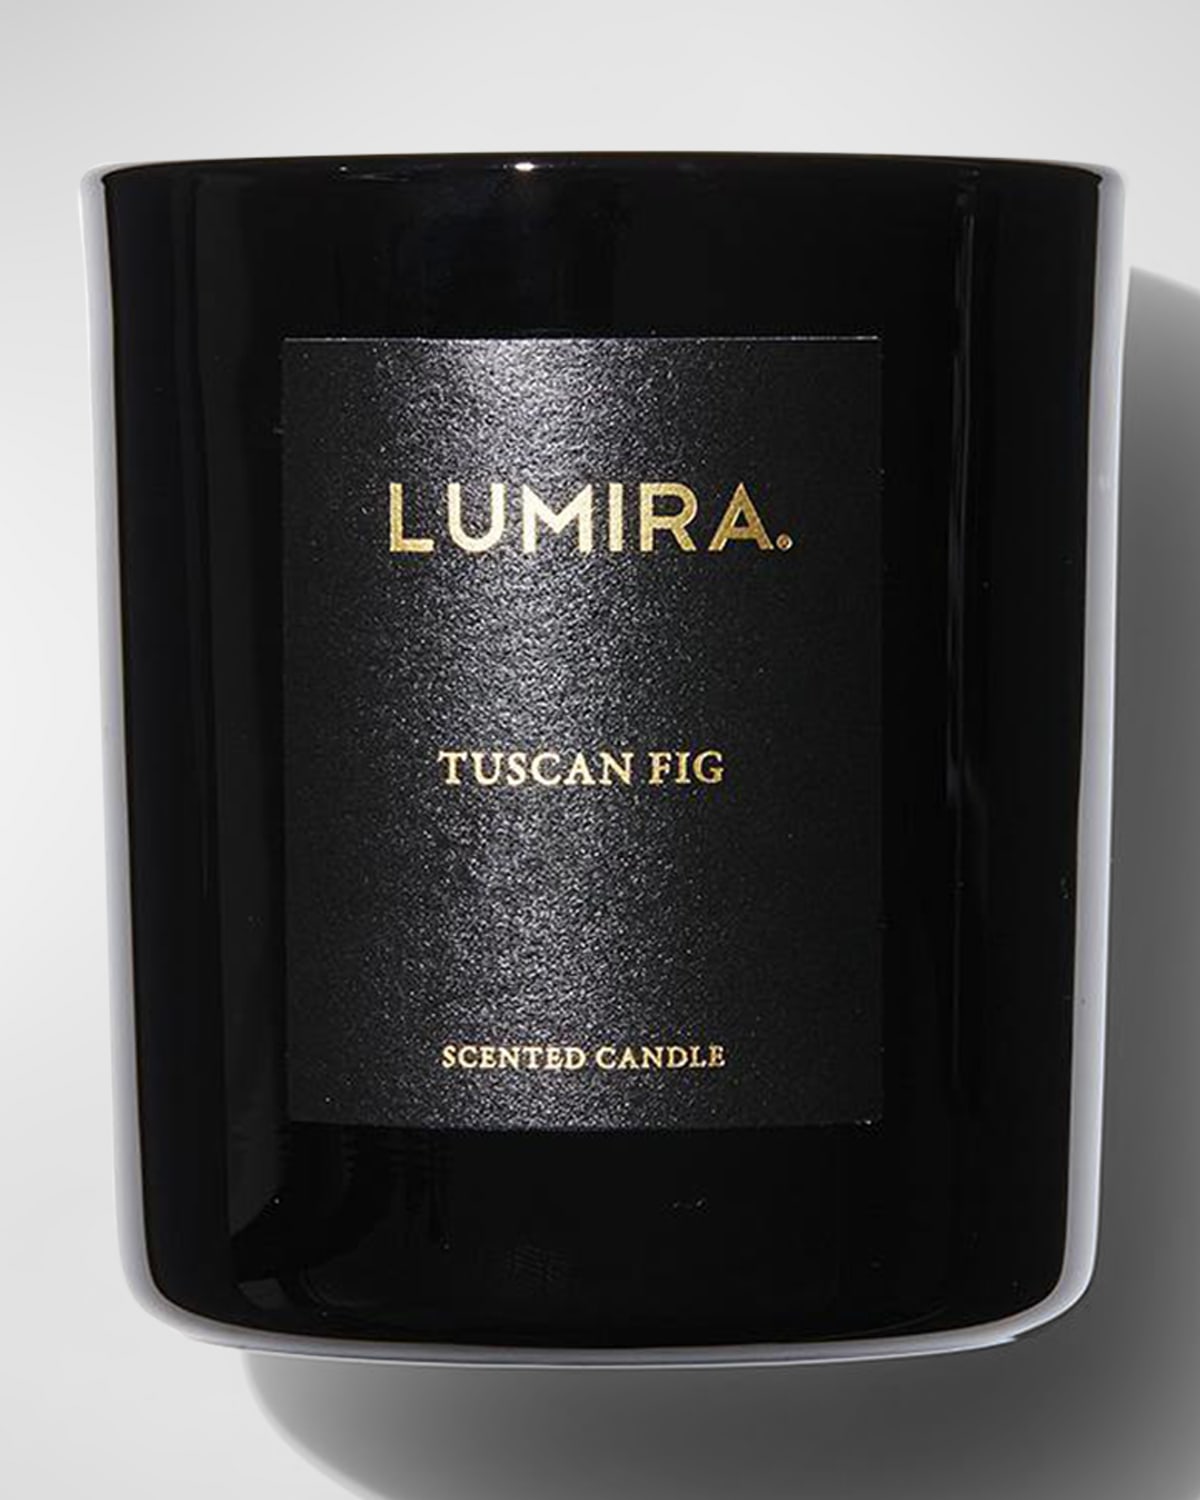 LUMIRA TUSCAN FIG CANDLE, 10.5 OZ.